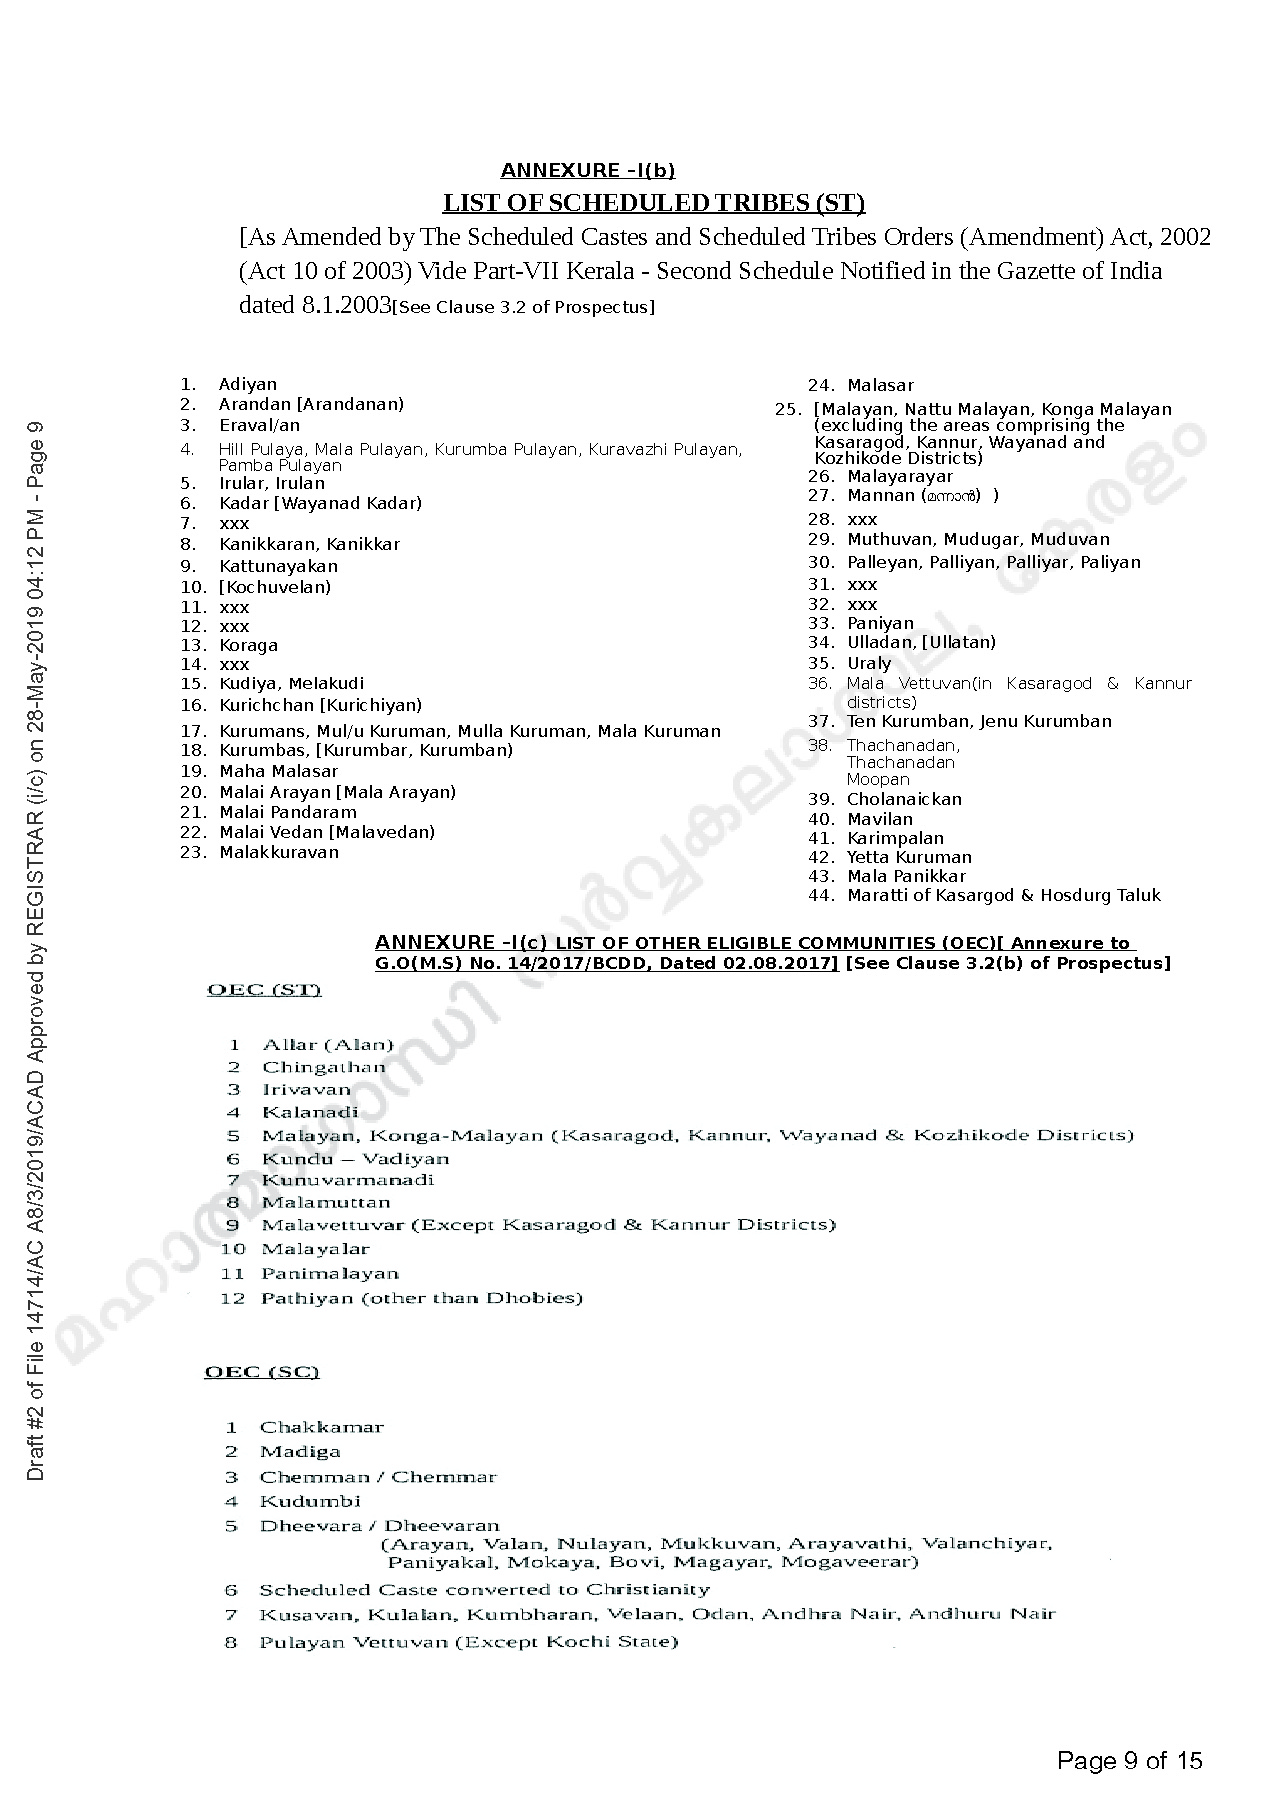 MG University M Ed Prospectus and Application form 2019 2020 - Notification Image 7